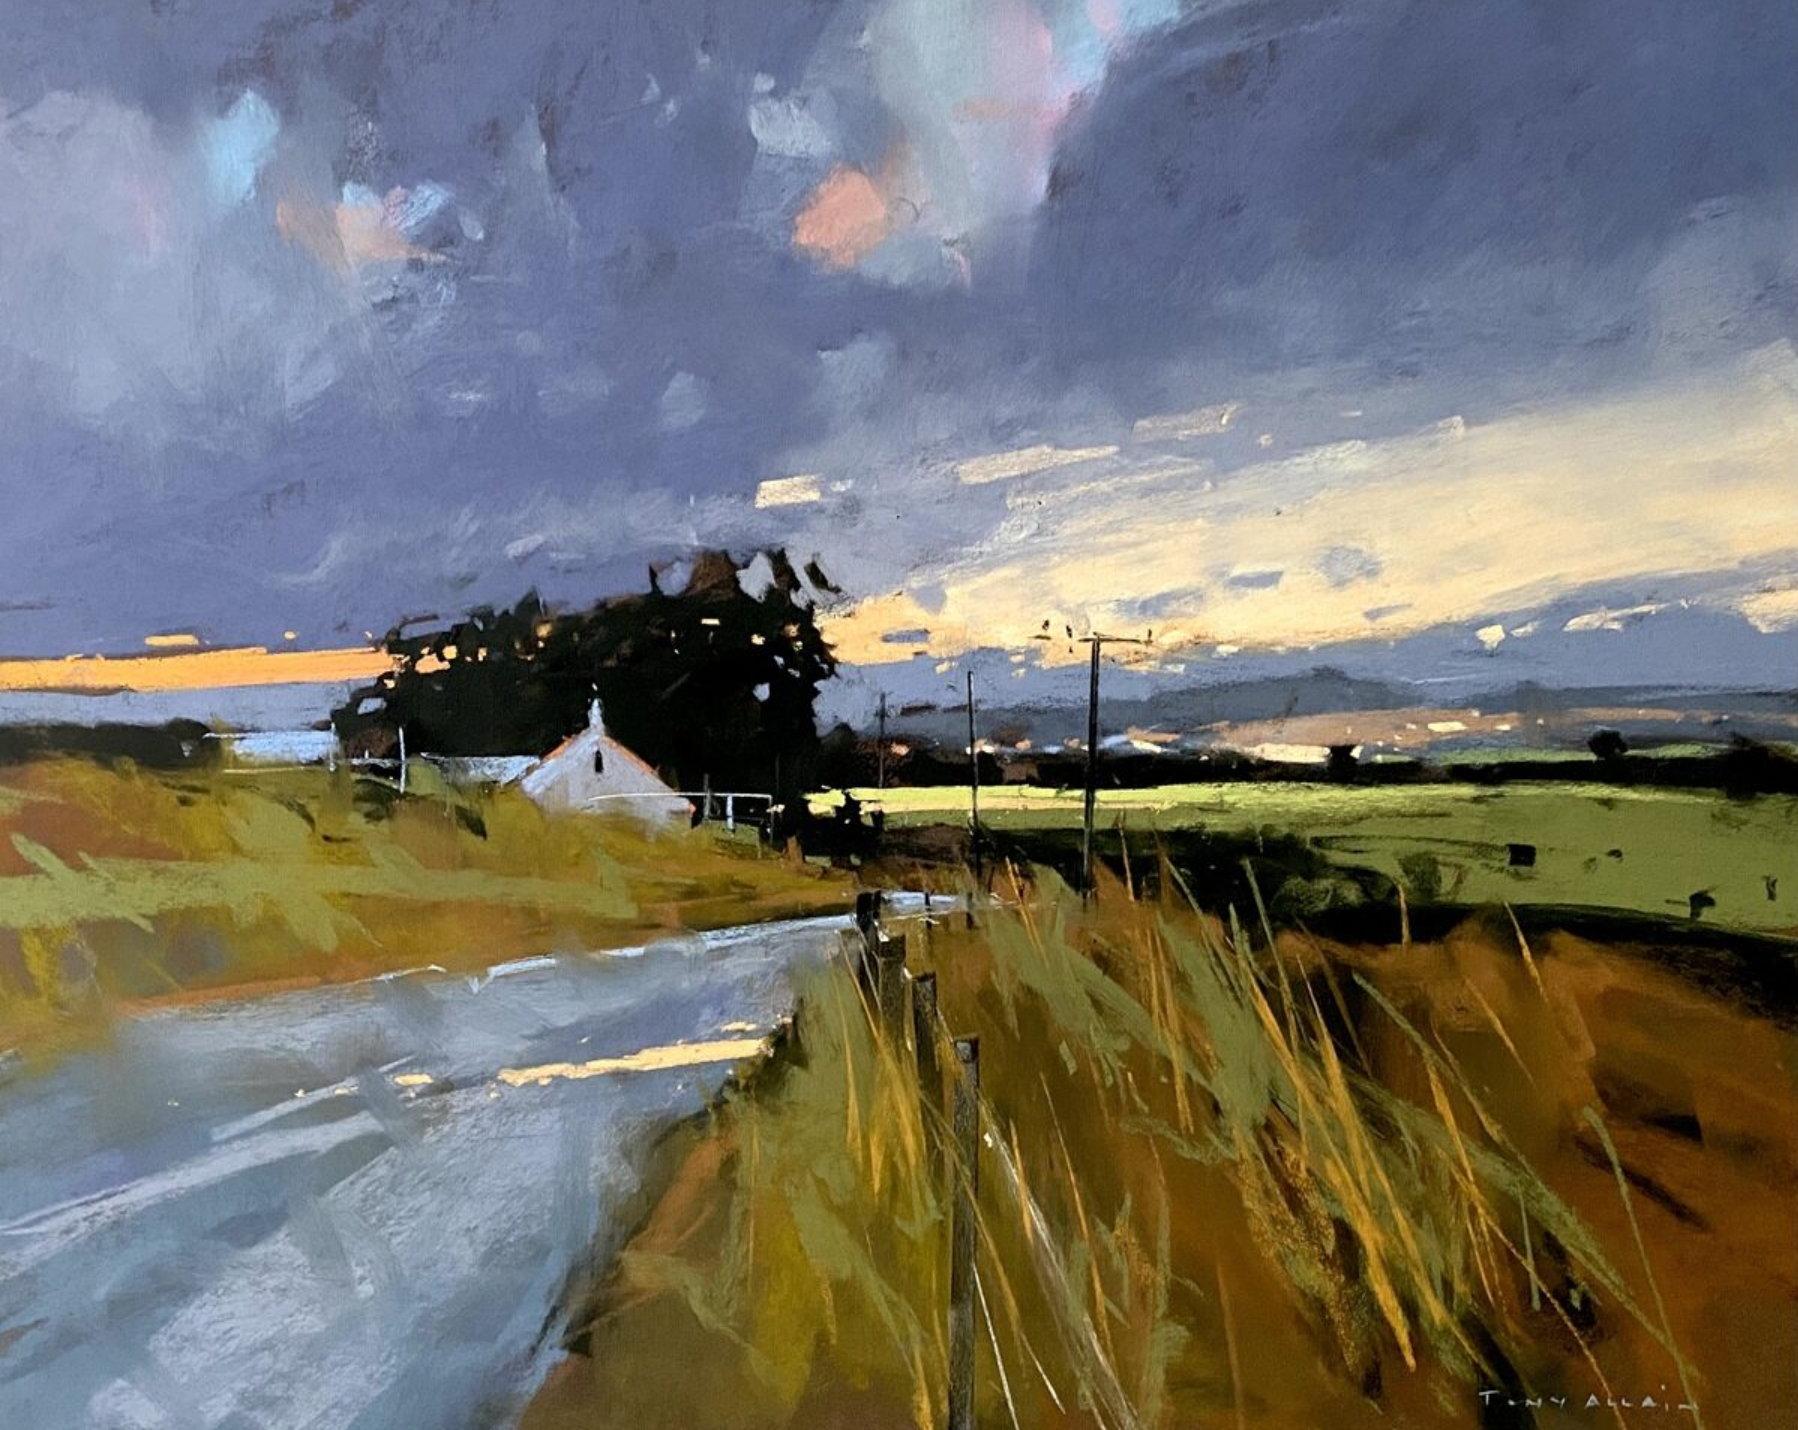 Tony Allain, "Sunset over Braco Rd," pastel, 20 x 25 in. Prix de Pastel. IAPS 9th Master Circle Division.